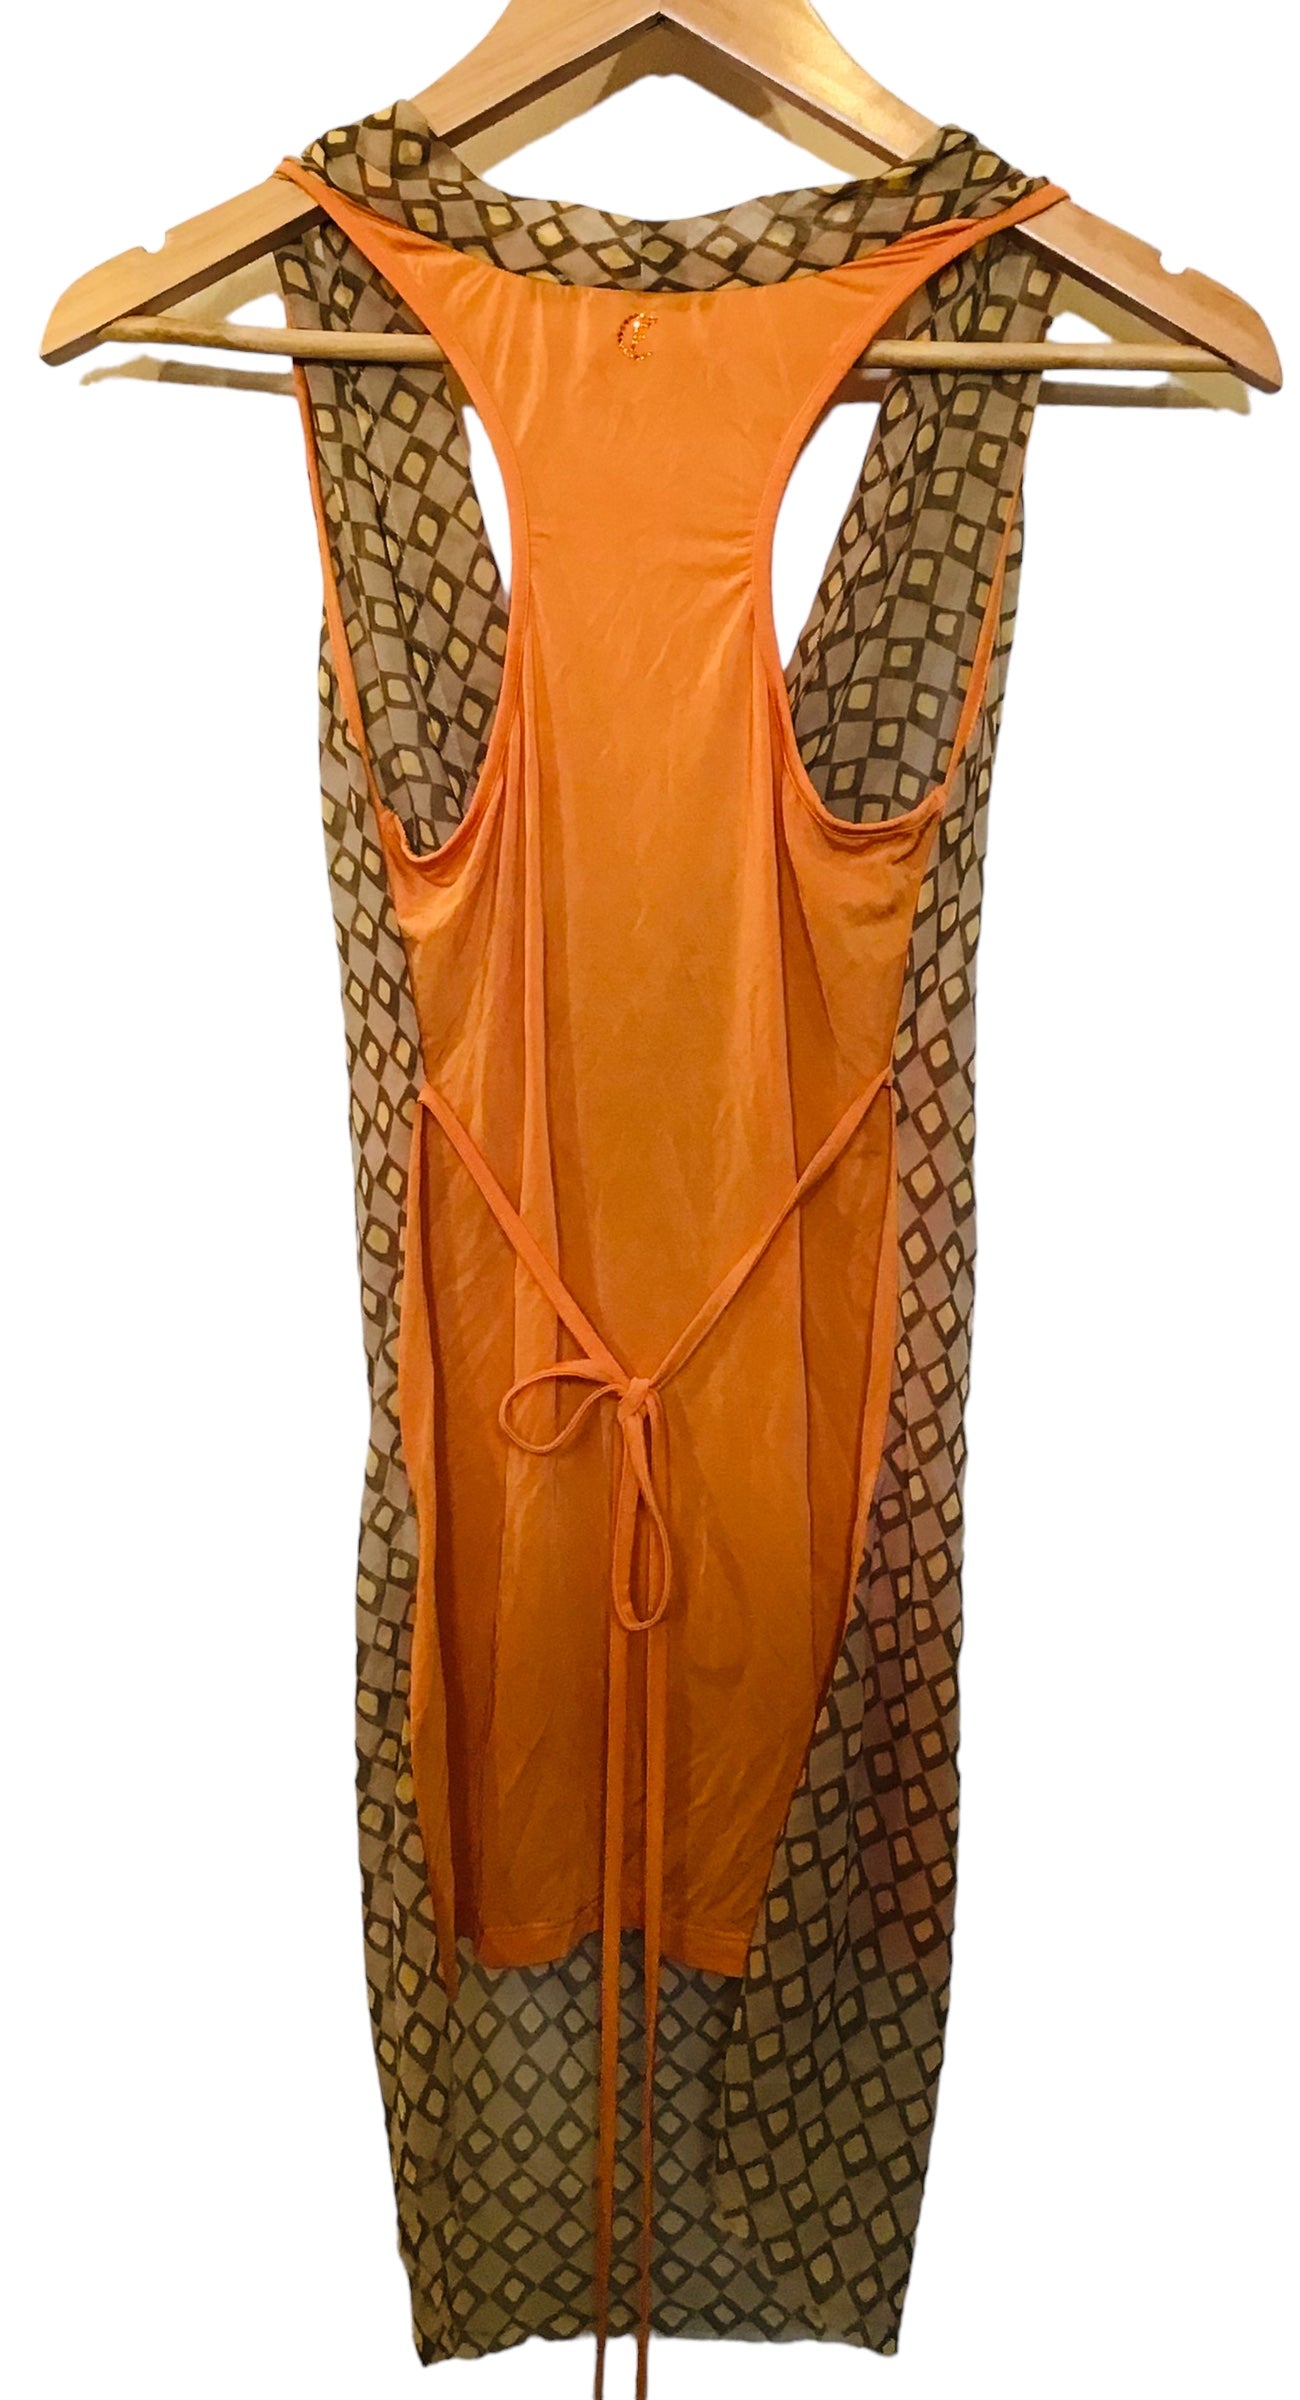 Women’s longline top by Italian designer Christina Effe (size 42, UK size 10)